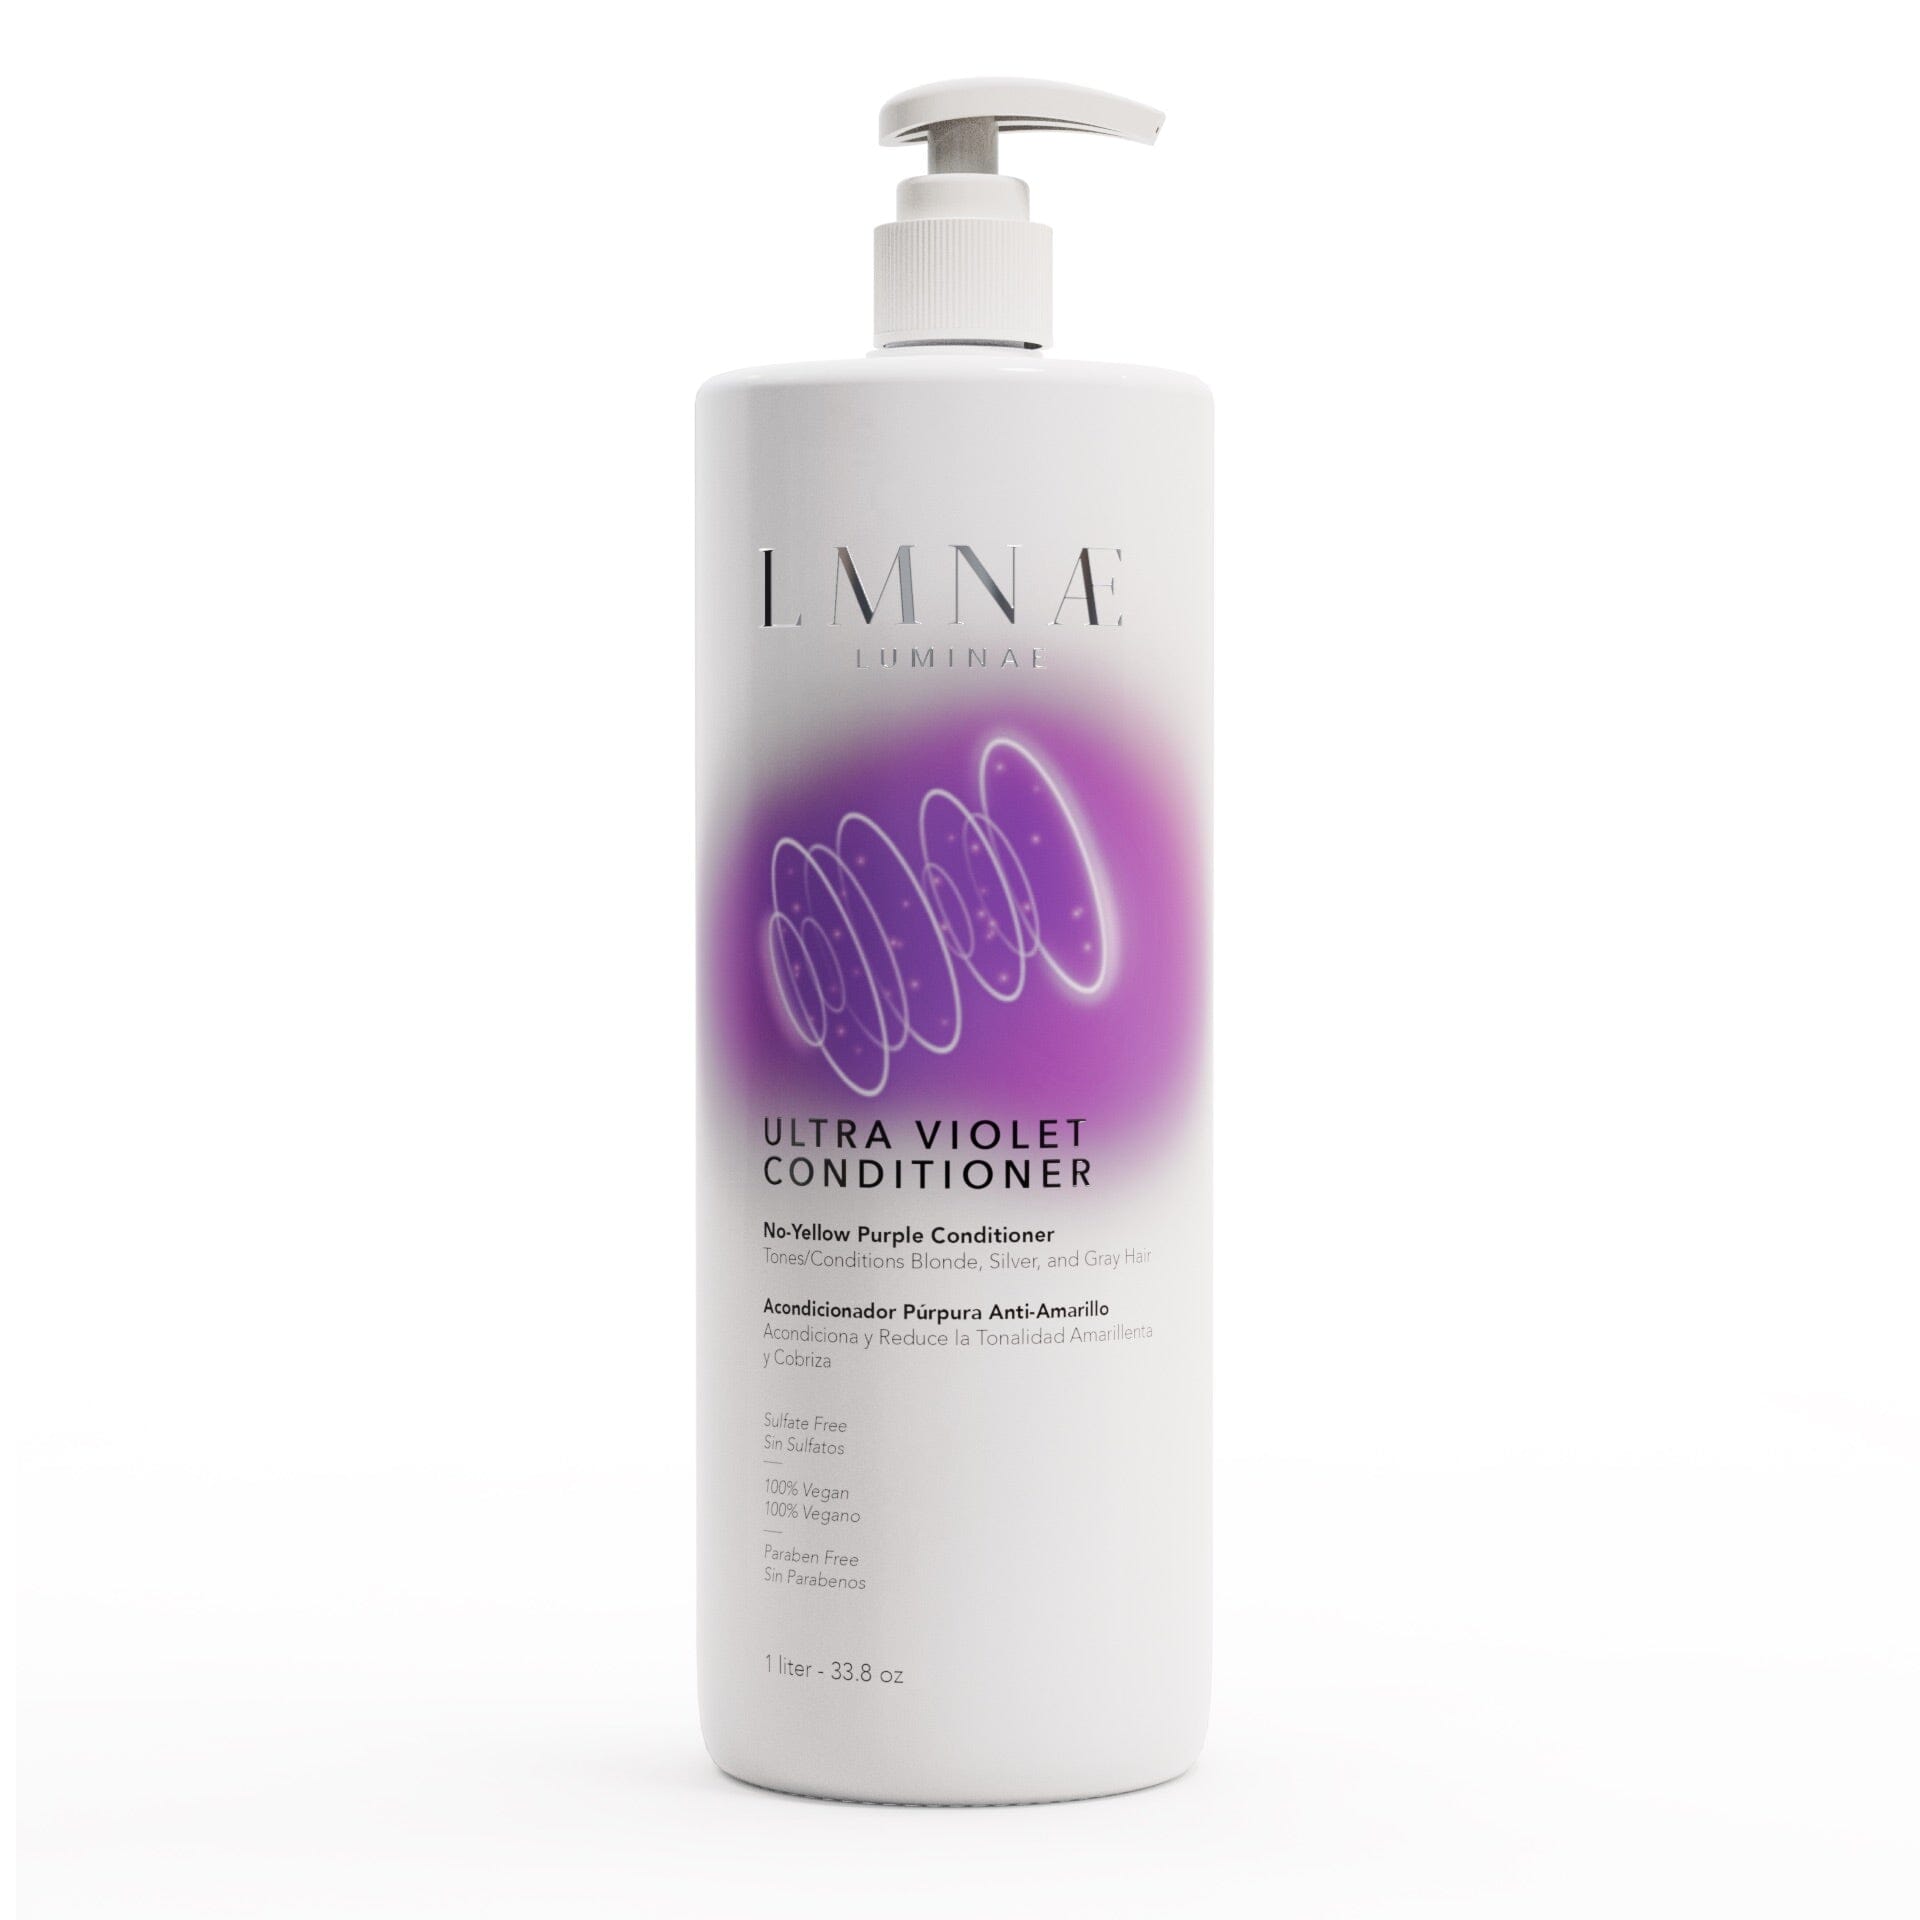 Ultra Violet Conditioner | LUMINAE SHAMPOO LUMINAE 33.8 fl. oz. - 1L 